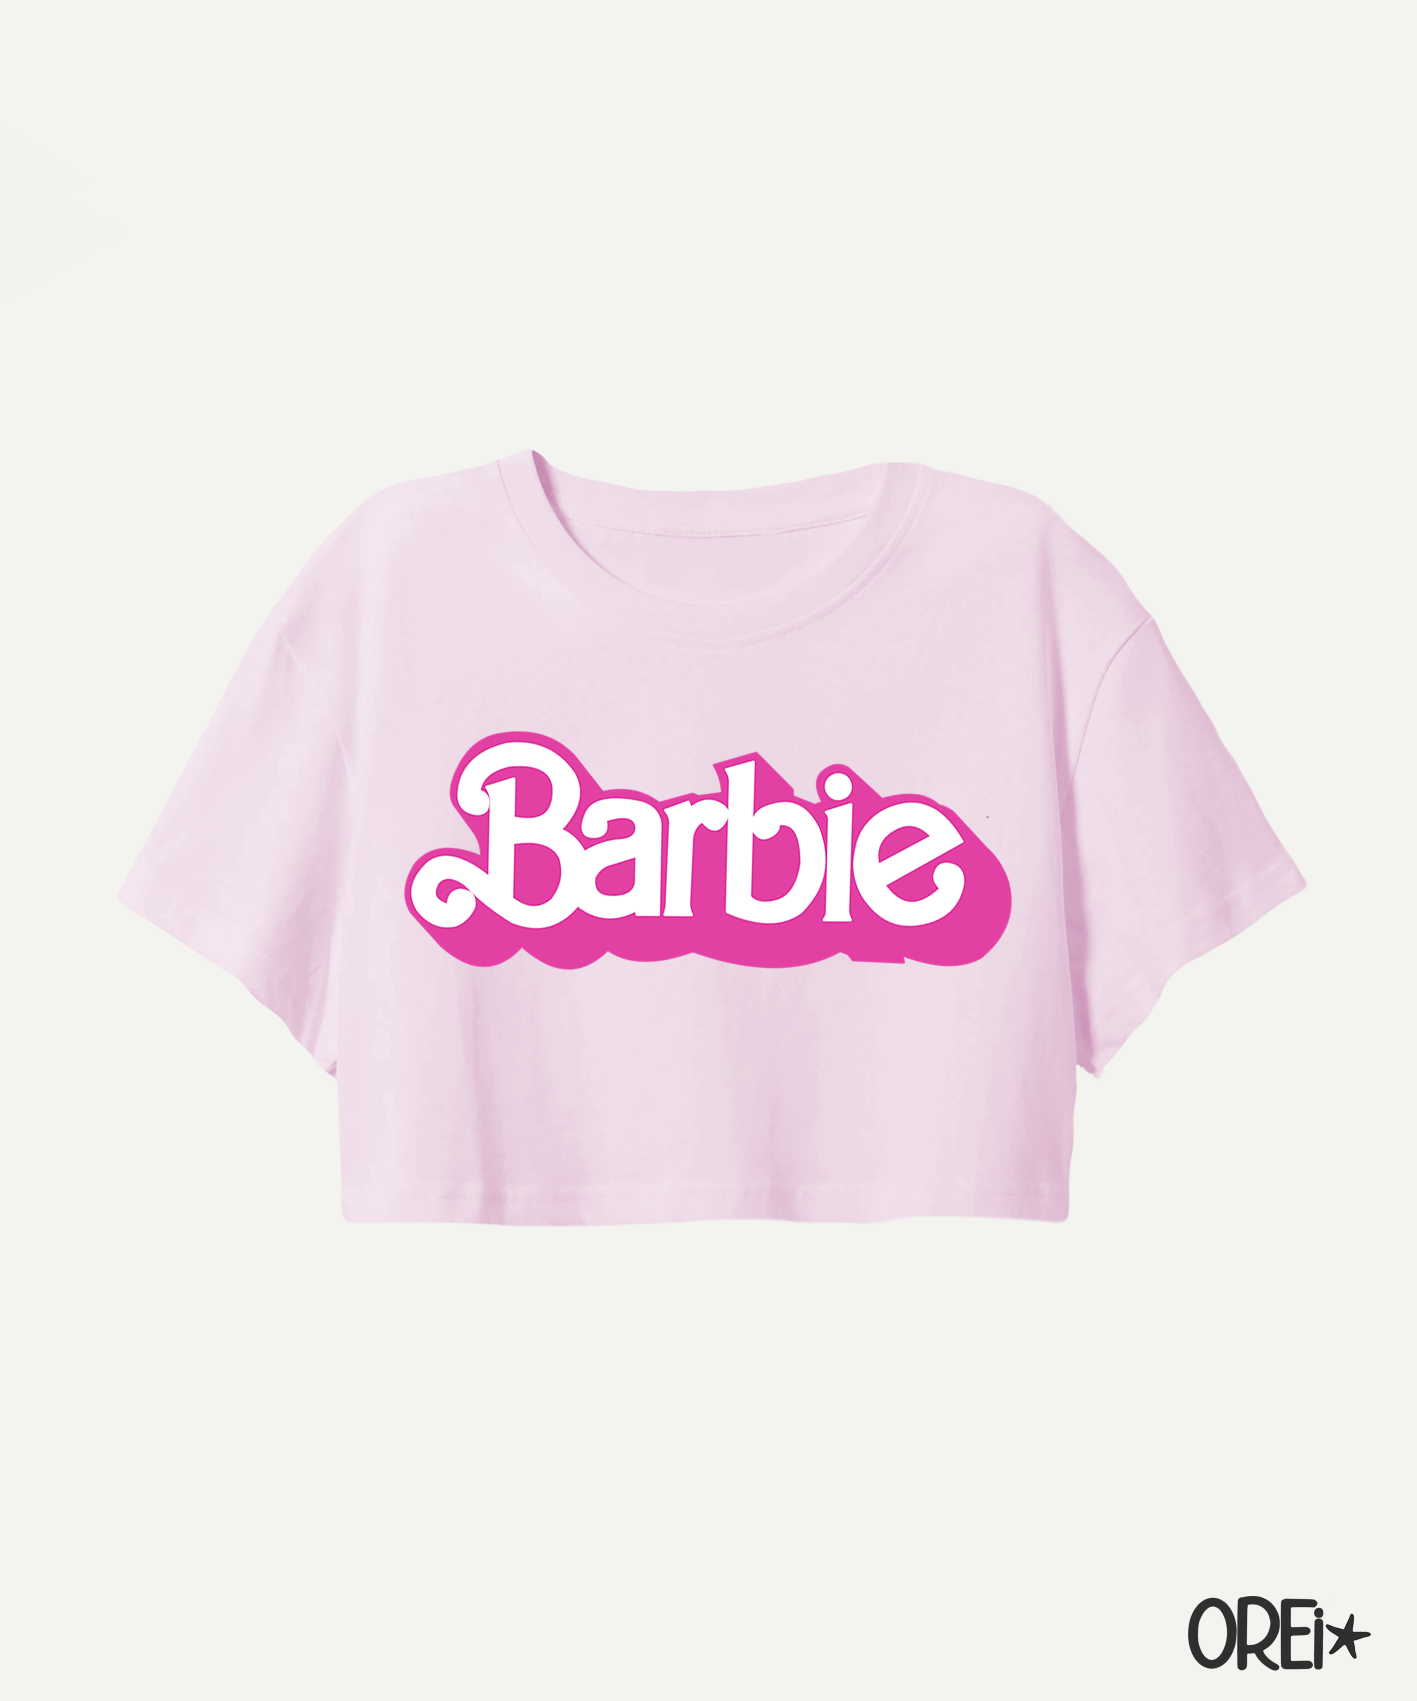 Retro - Barbie Crop Top